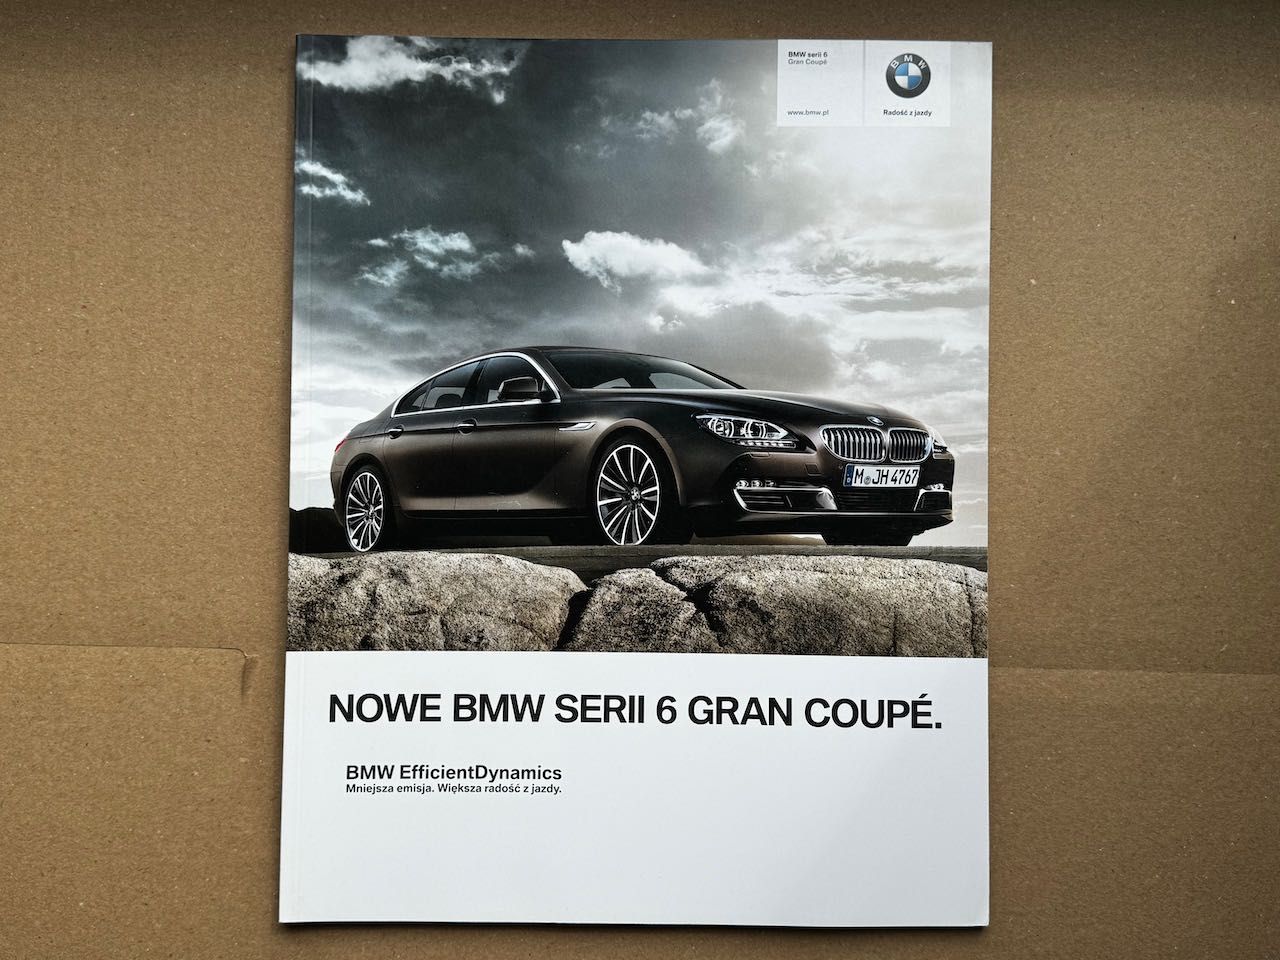 2012 / BMW Serii 6 Gran Coupé (F06) 6GC / PL / prospekt katalog